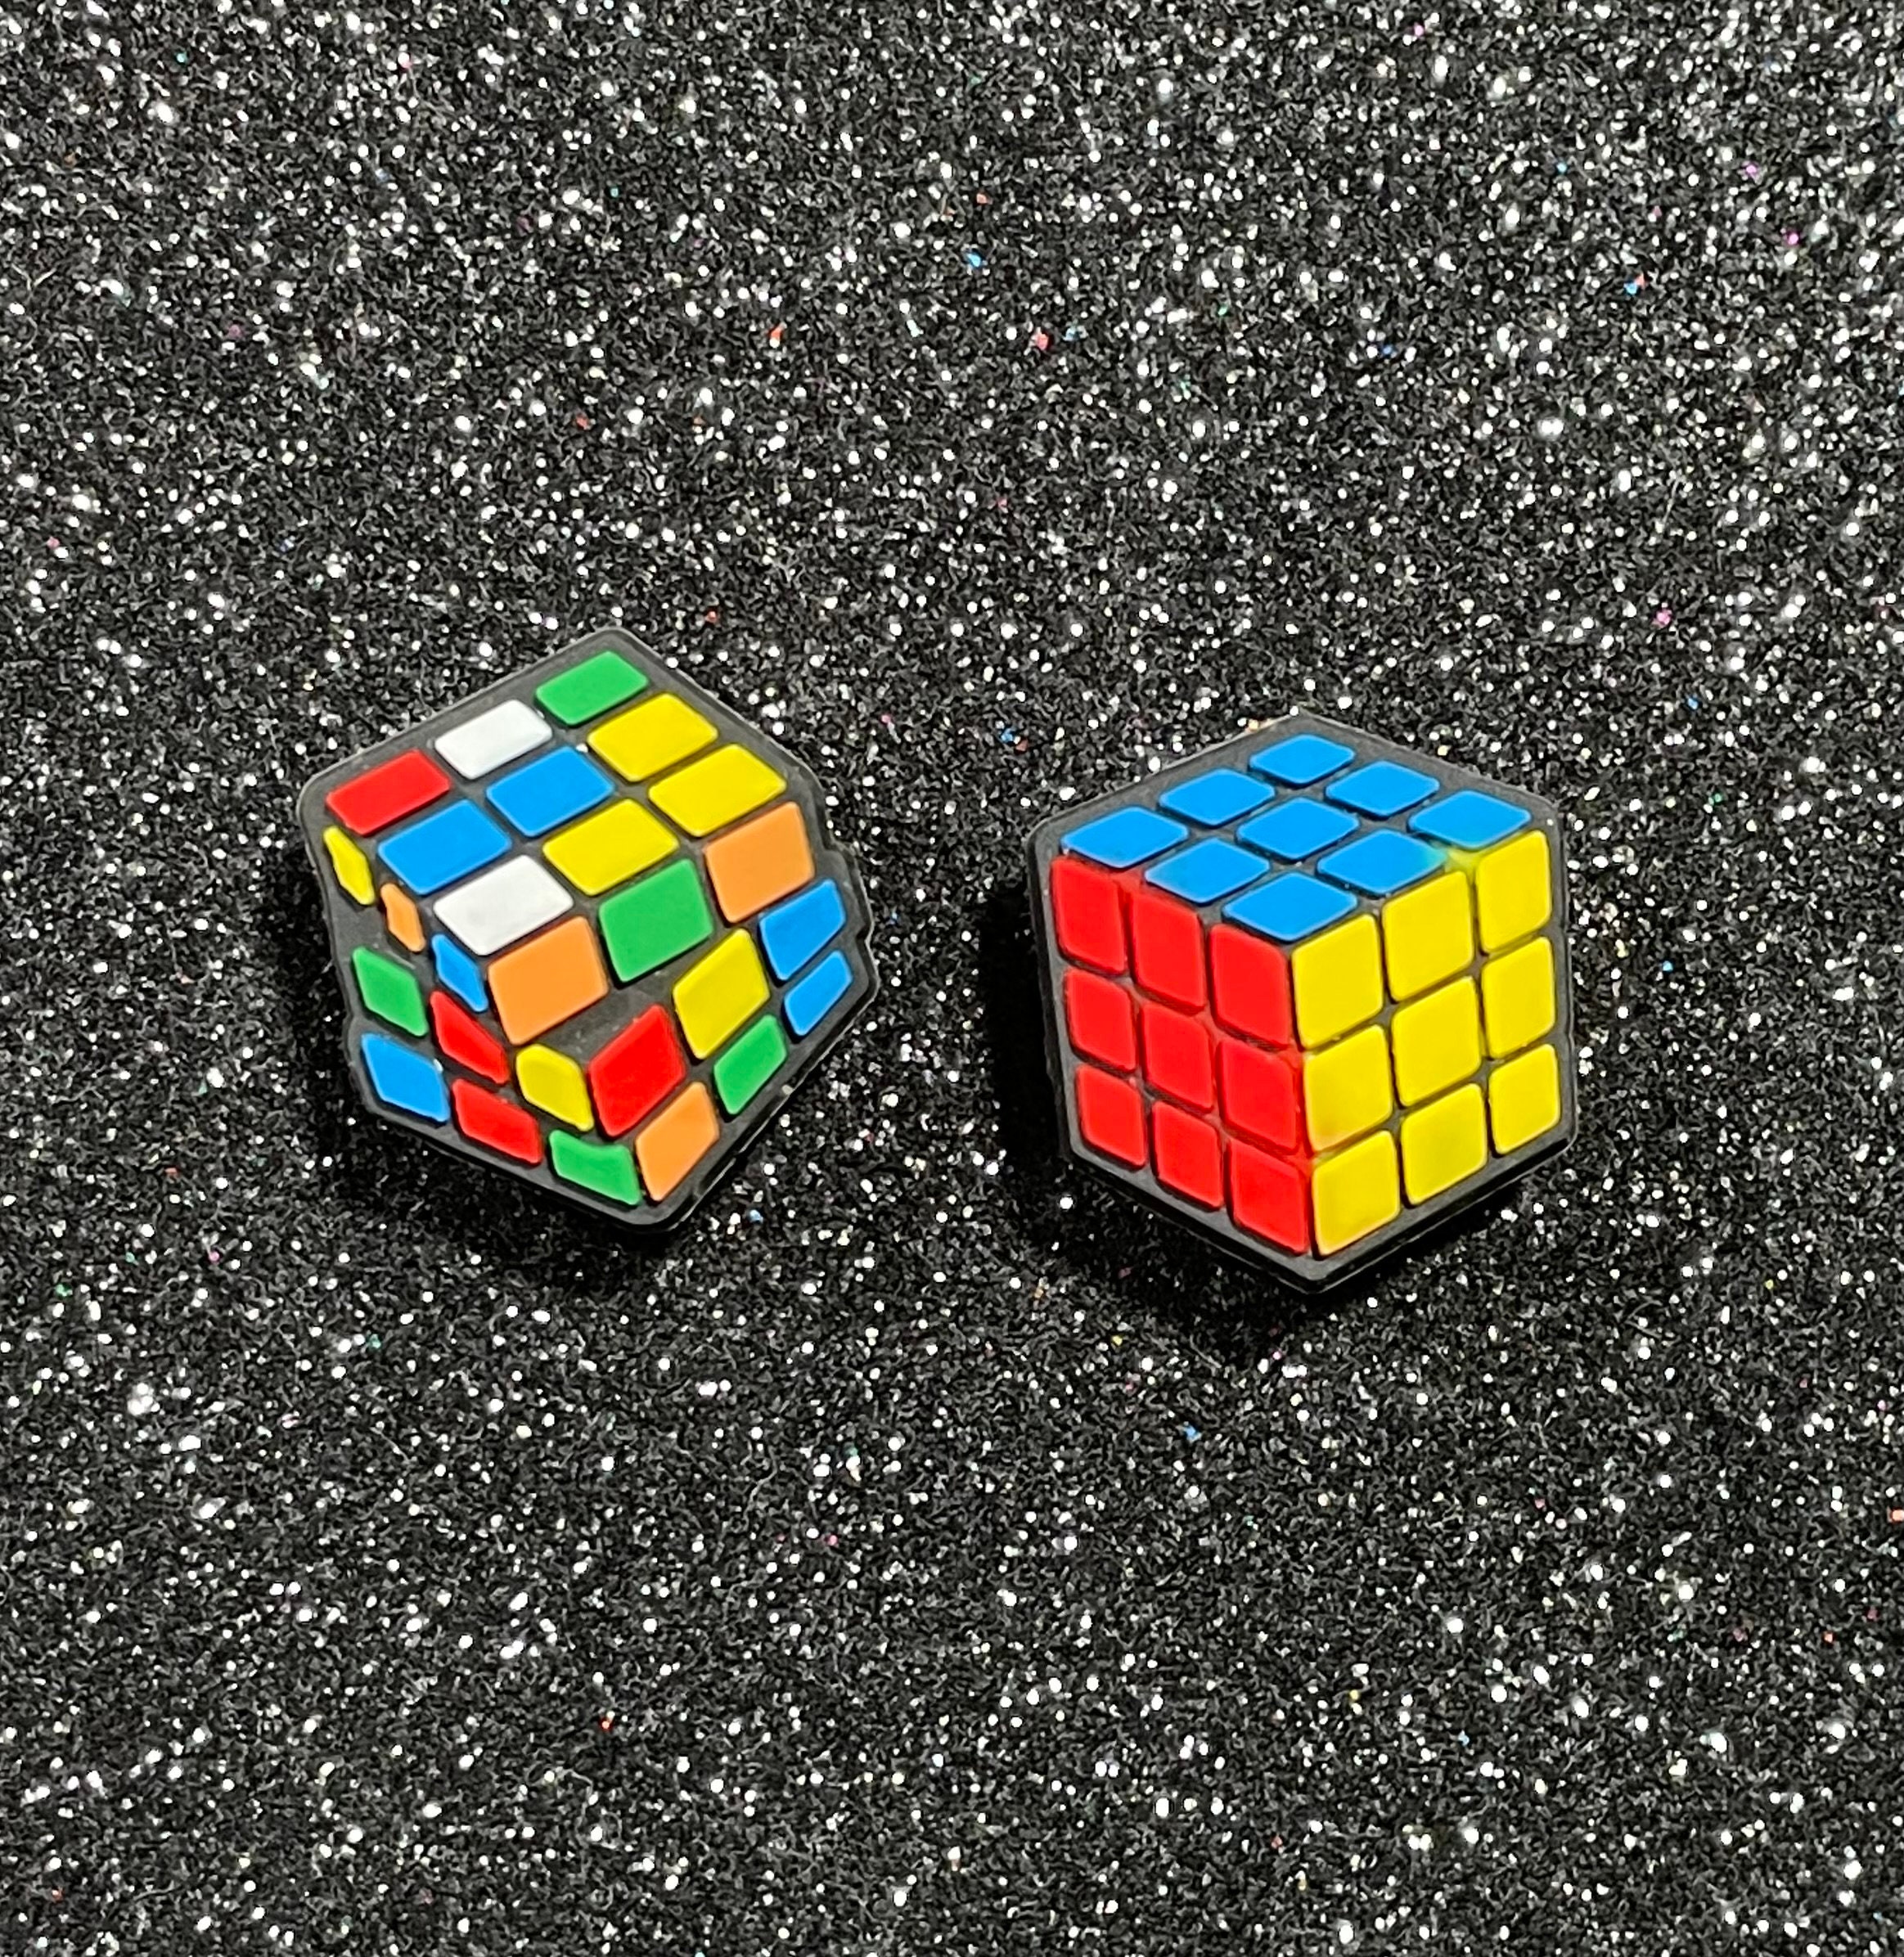 Working Micro Rubik's Cube 1cm Rubix Cube Smallest Rubik's Cube Puzzle Toy  Tiniest Rubix Cube Super Tiny Rubik's Cube Miniture 